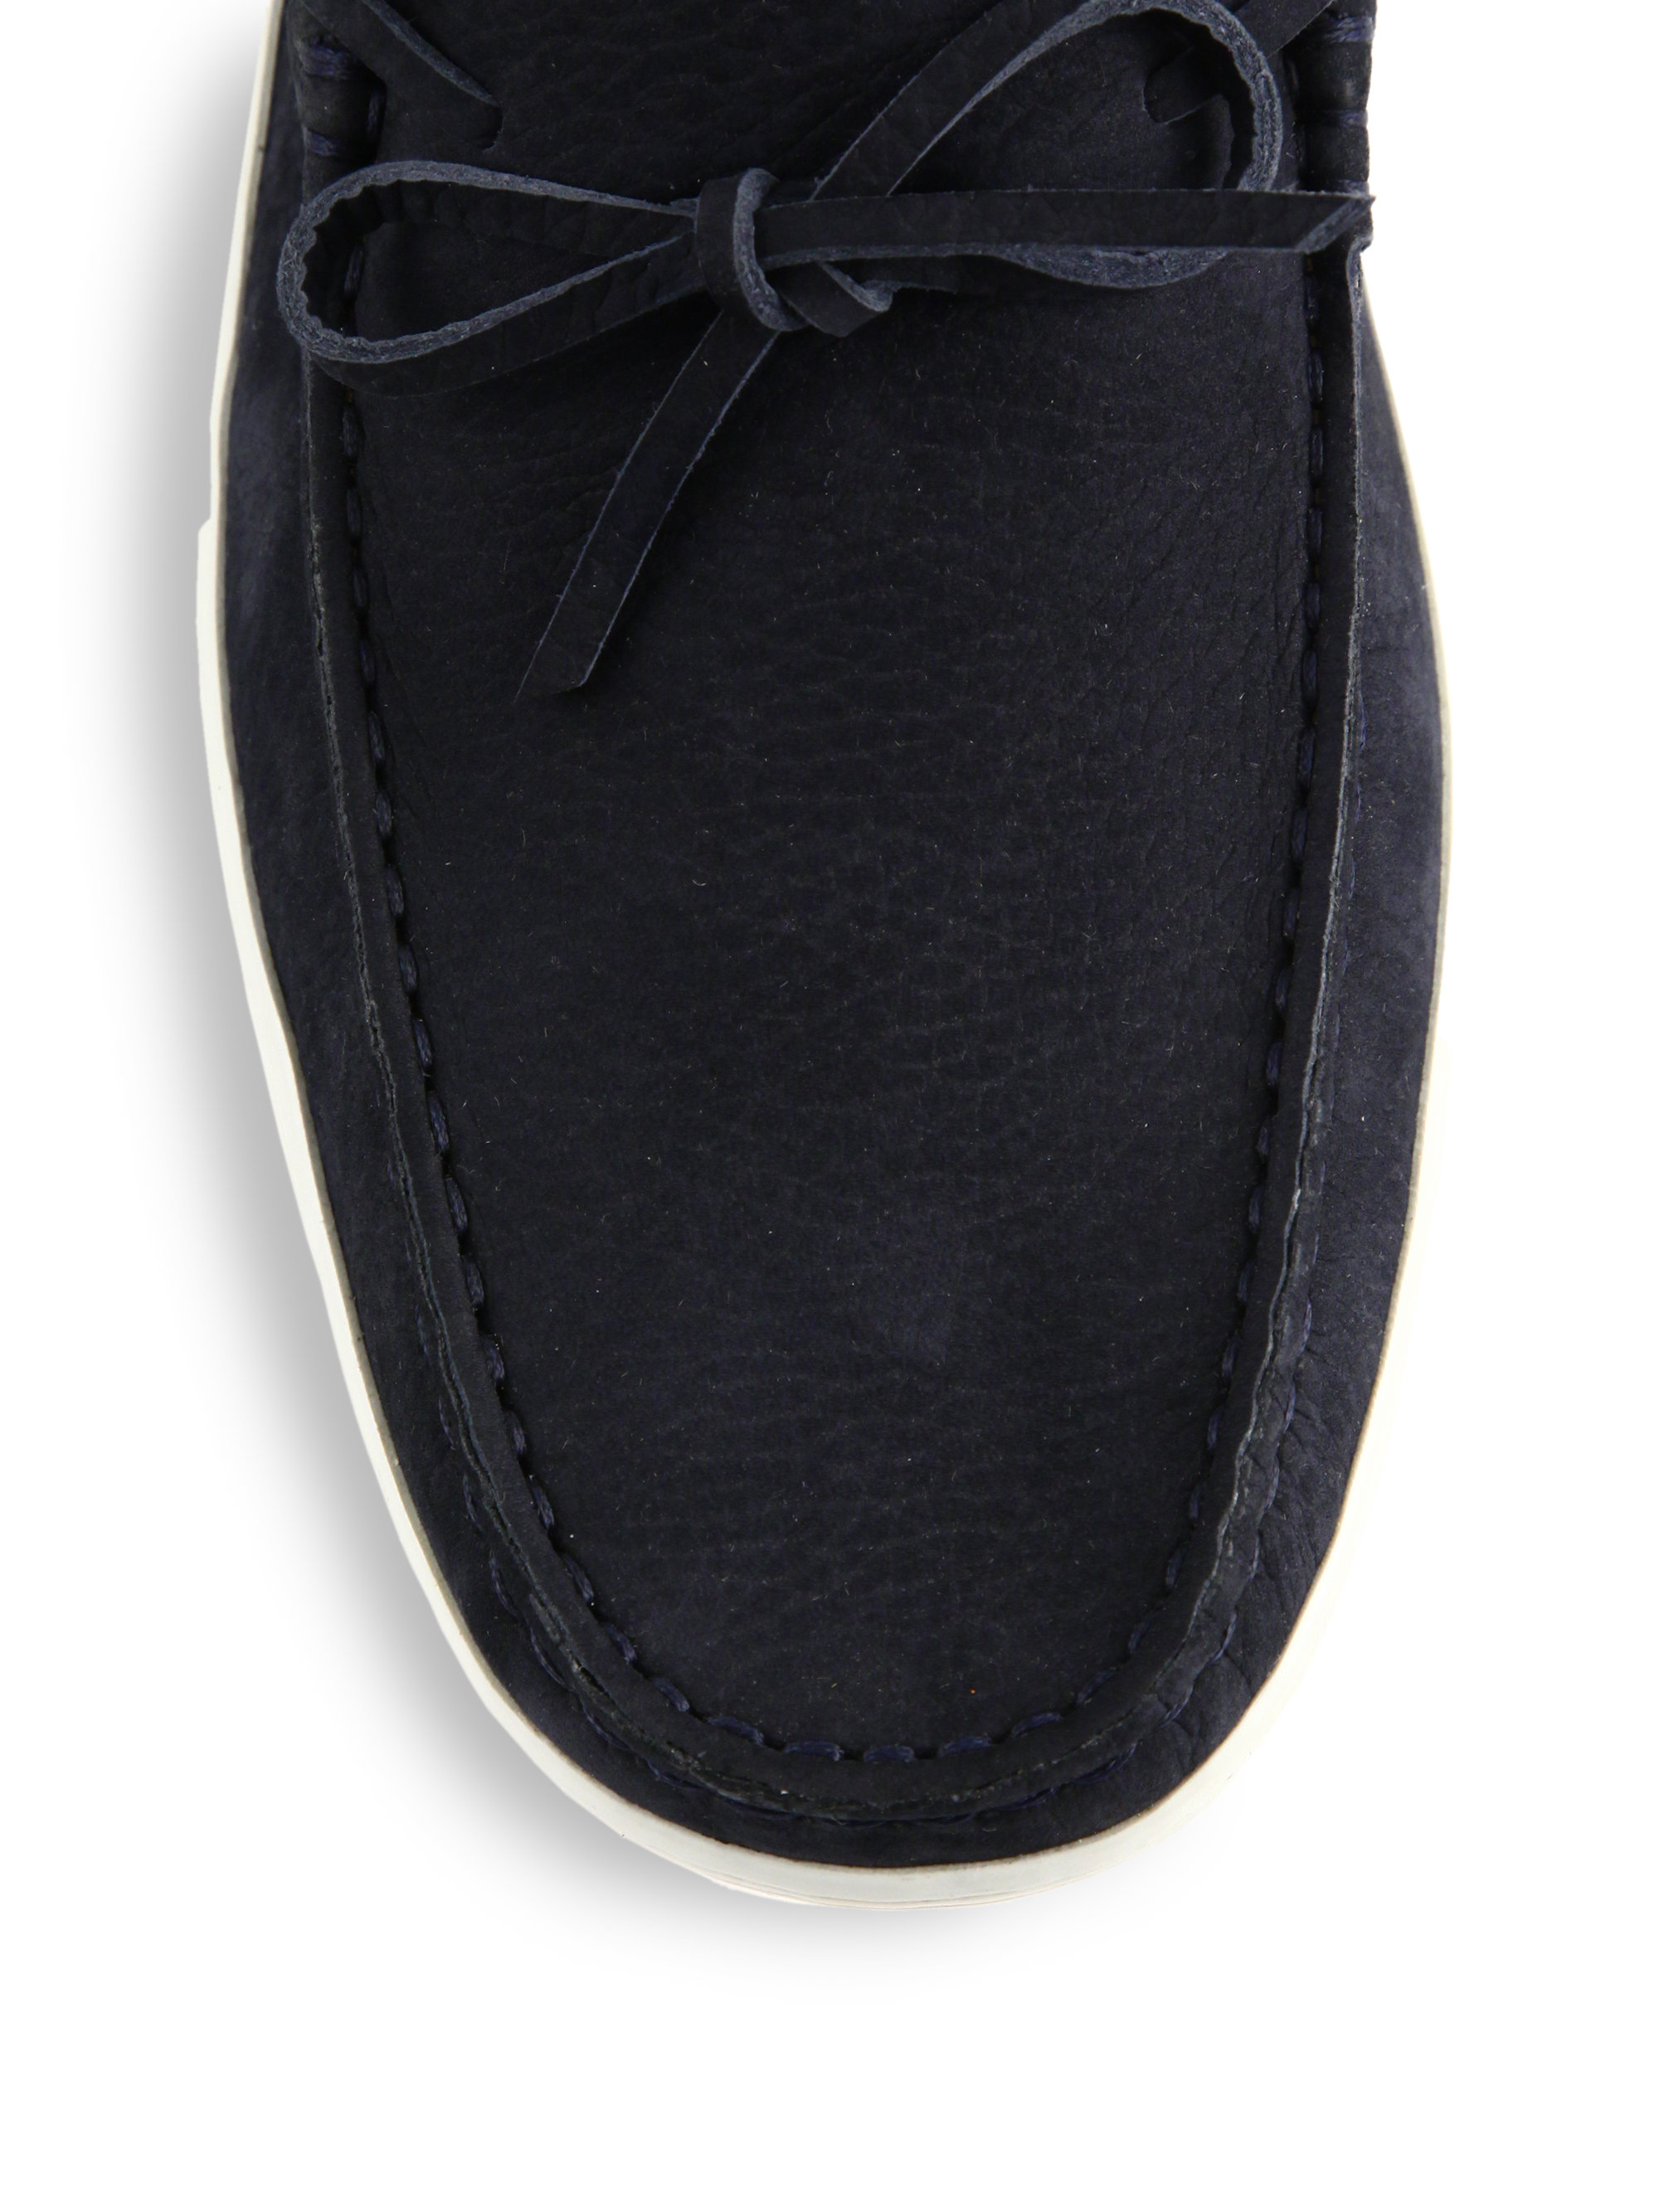 black suede boat shoes